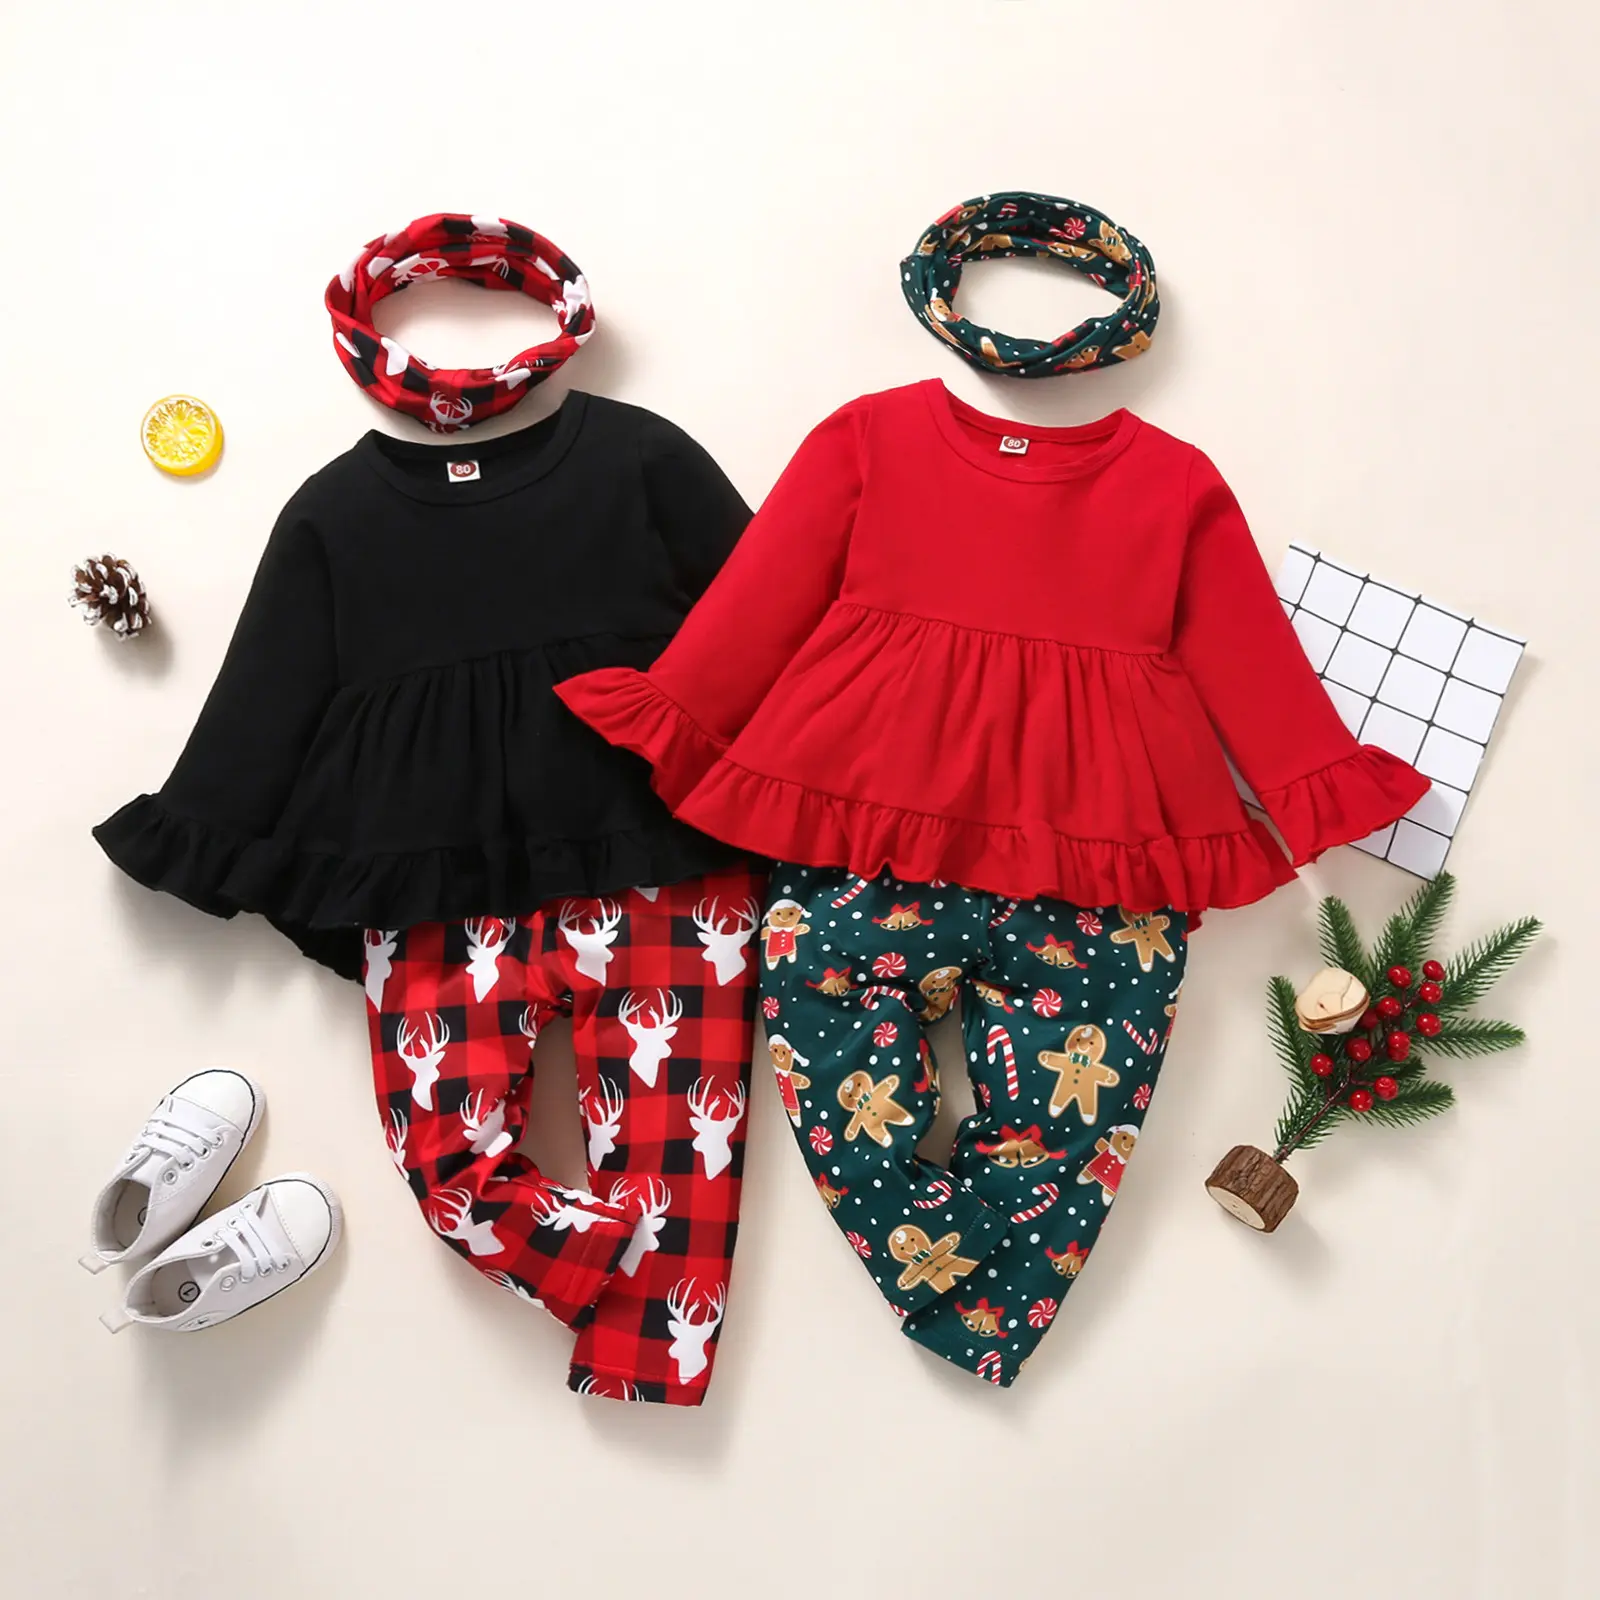 Setelan Baju Natal Anak Perempuan, Baju Kaos Lengan Panjang + Celana Rusa + Bandana, Baju Tahun Baru